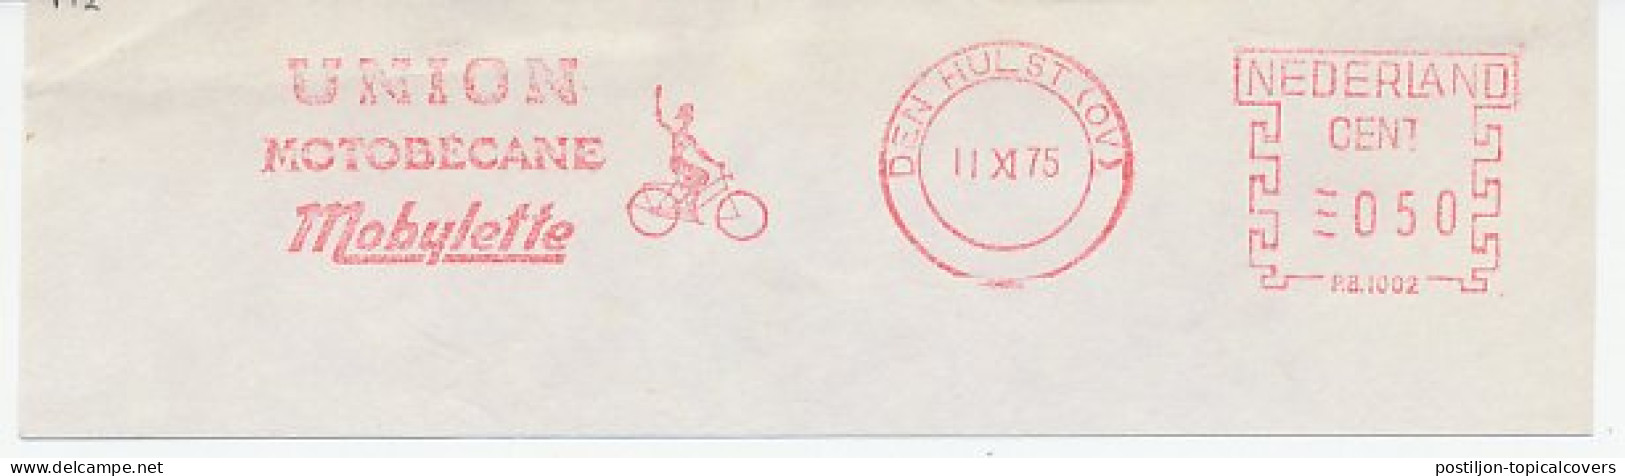 Meter Cut Netherlands 1975 Bicycle - Union - Motobecane - Mobylette - Vélo